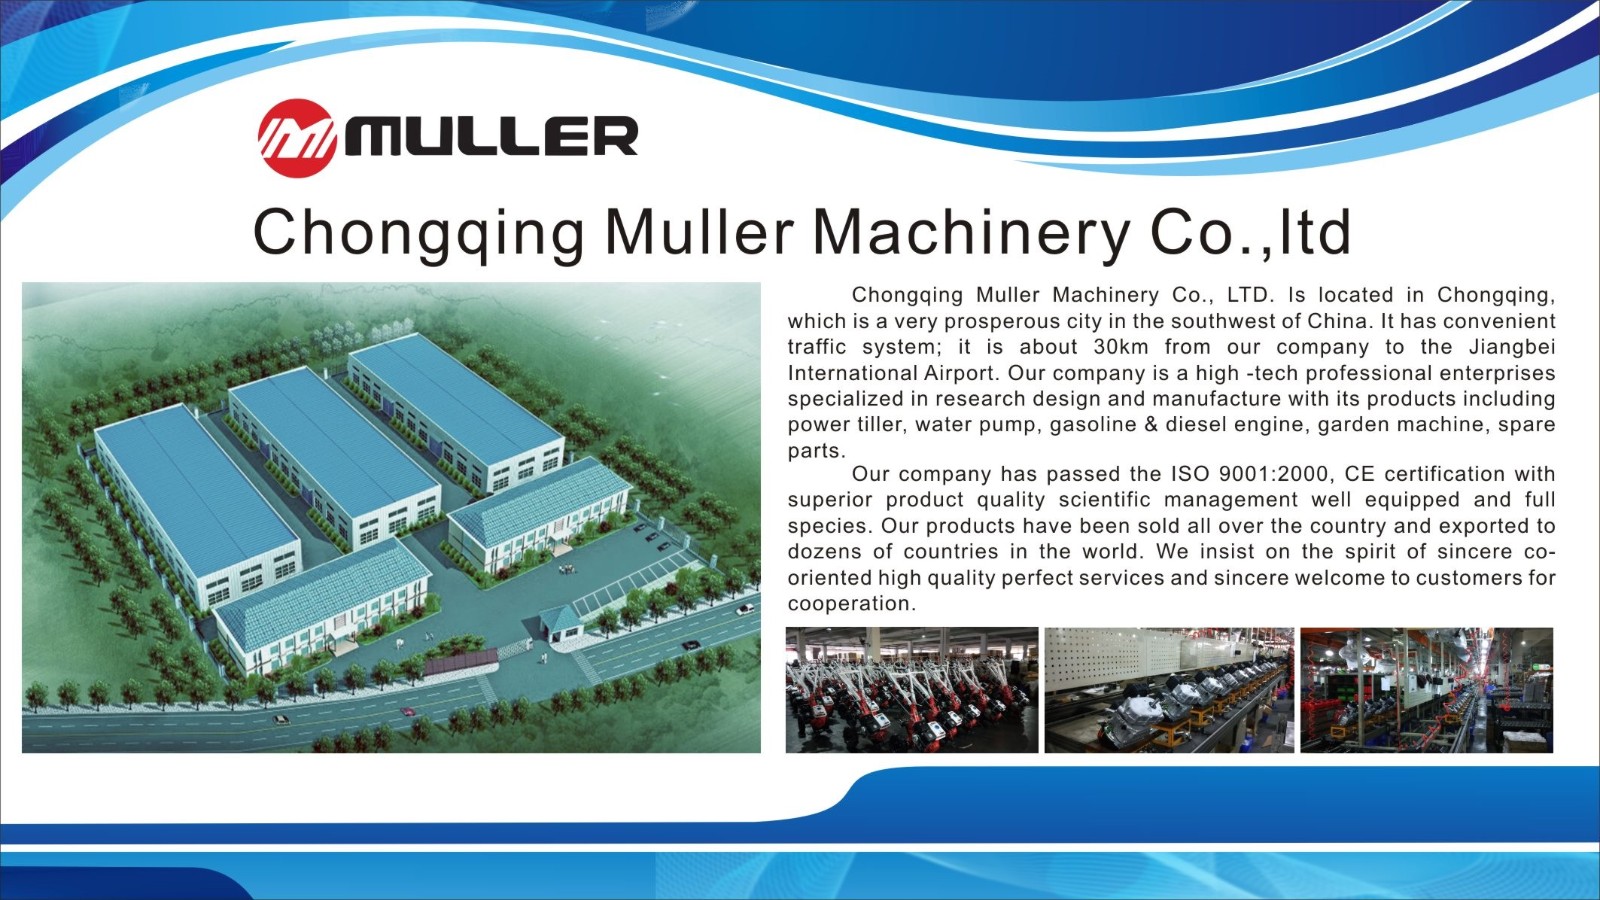 CHONGQING MULLER MACHINERY CO.,LTD